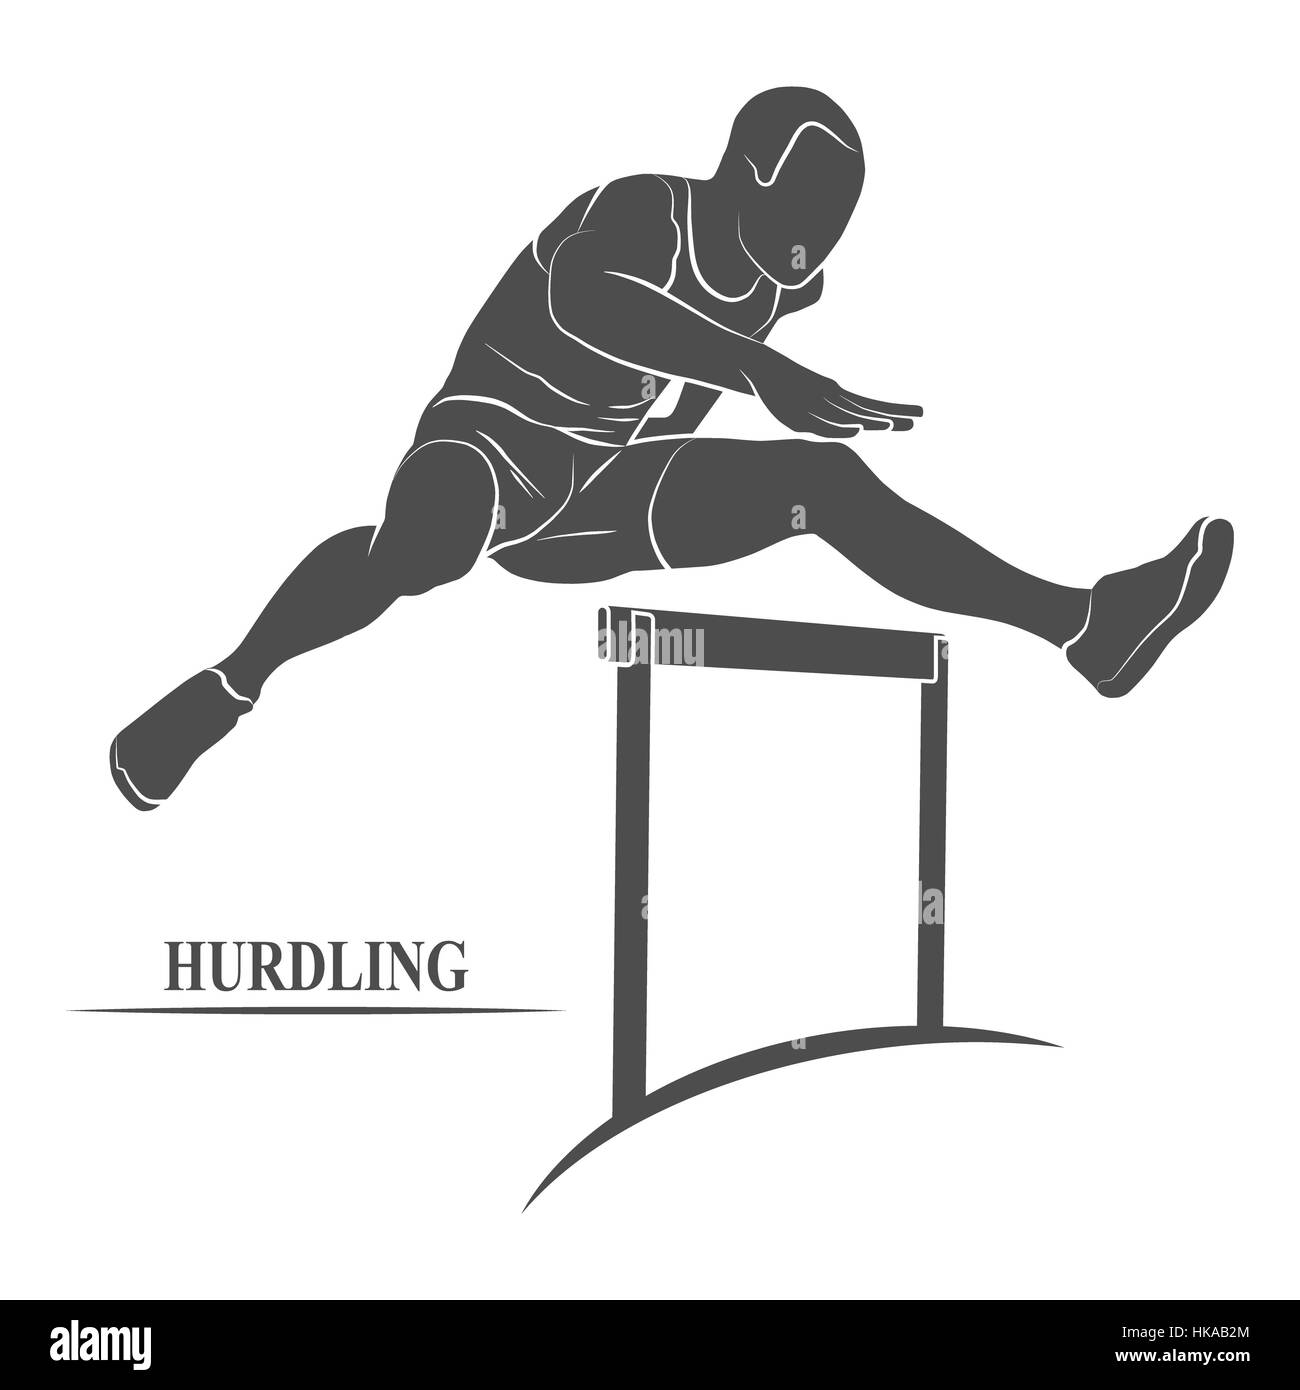 Man jumping over hurdles icon. Photo illustration. Stock Photo